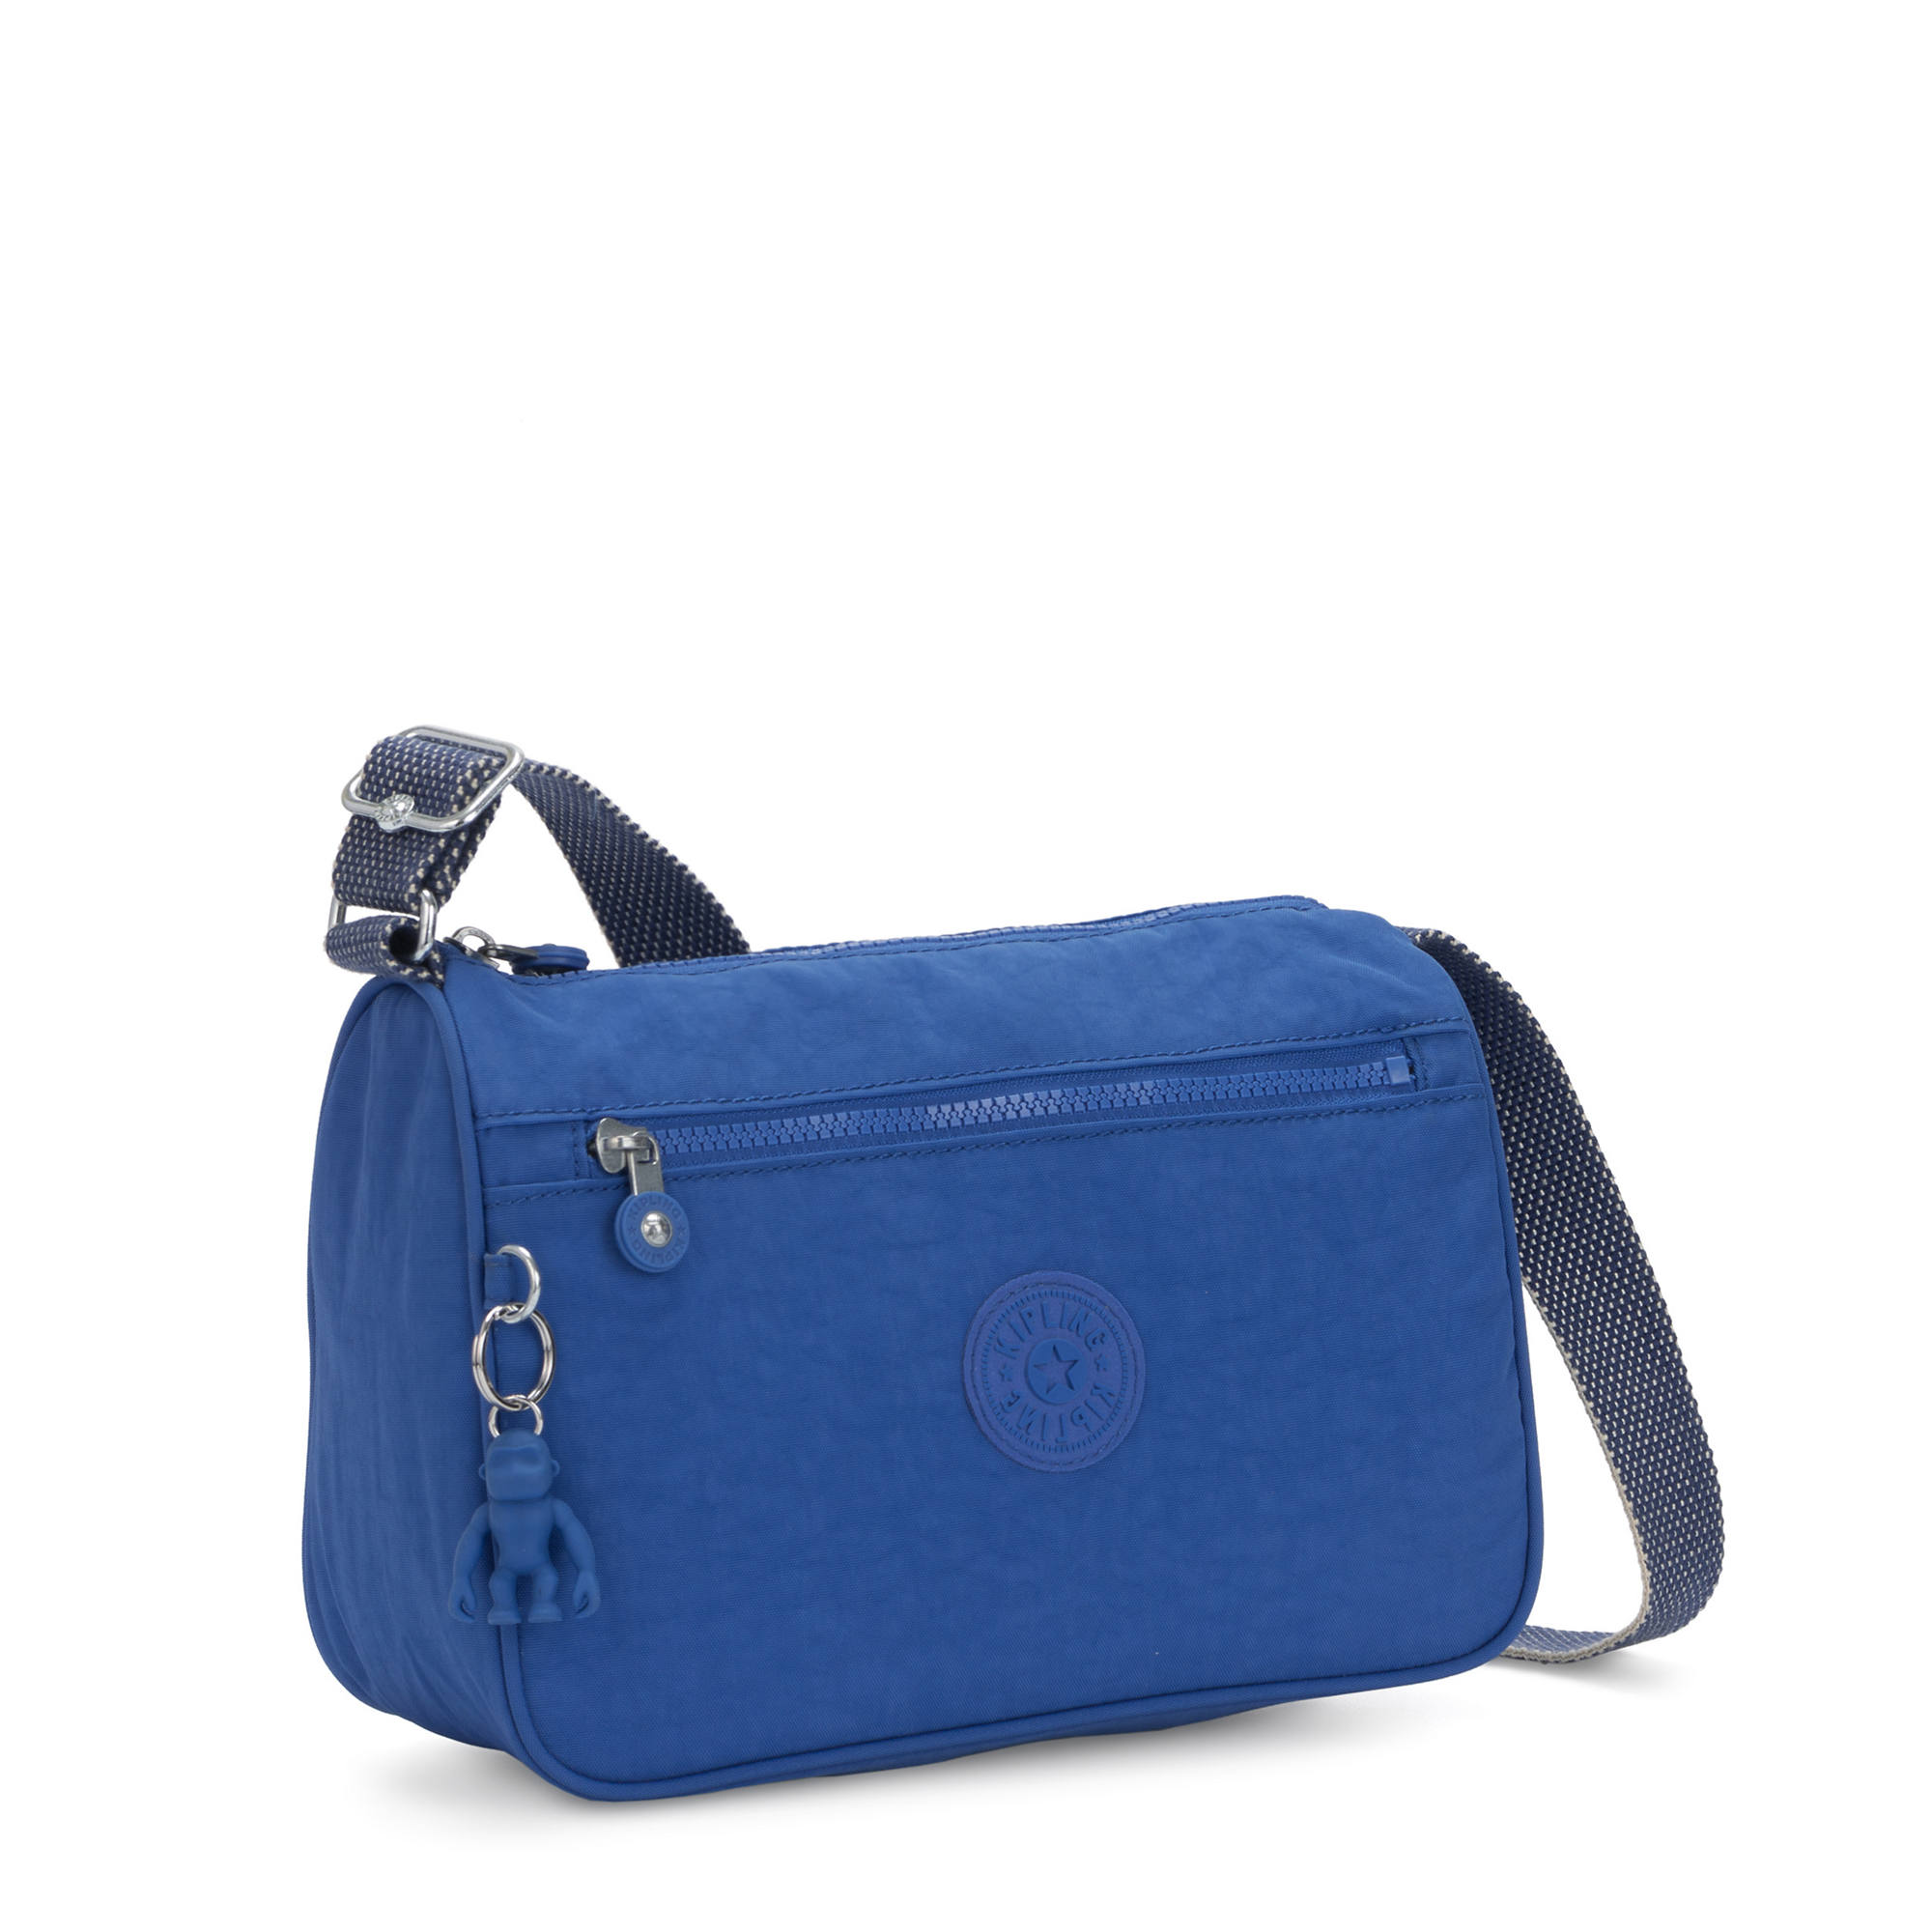 Kipling Callie Handbag Crosbody Shoulder Bag Black | eBay